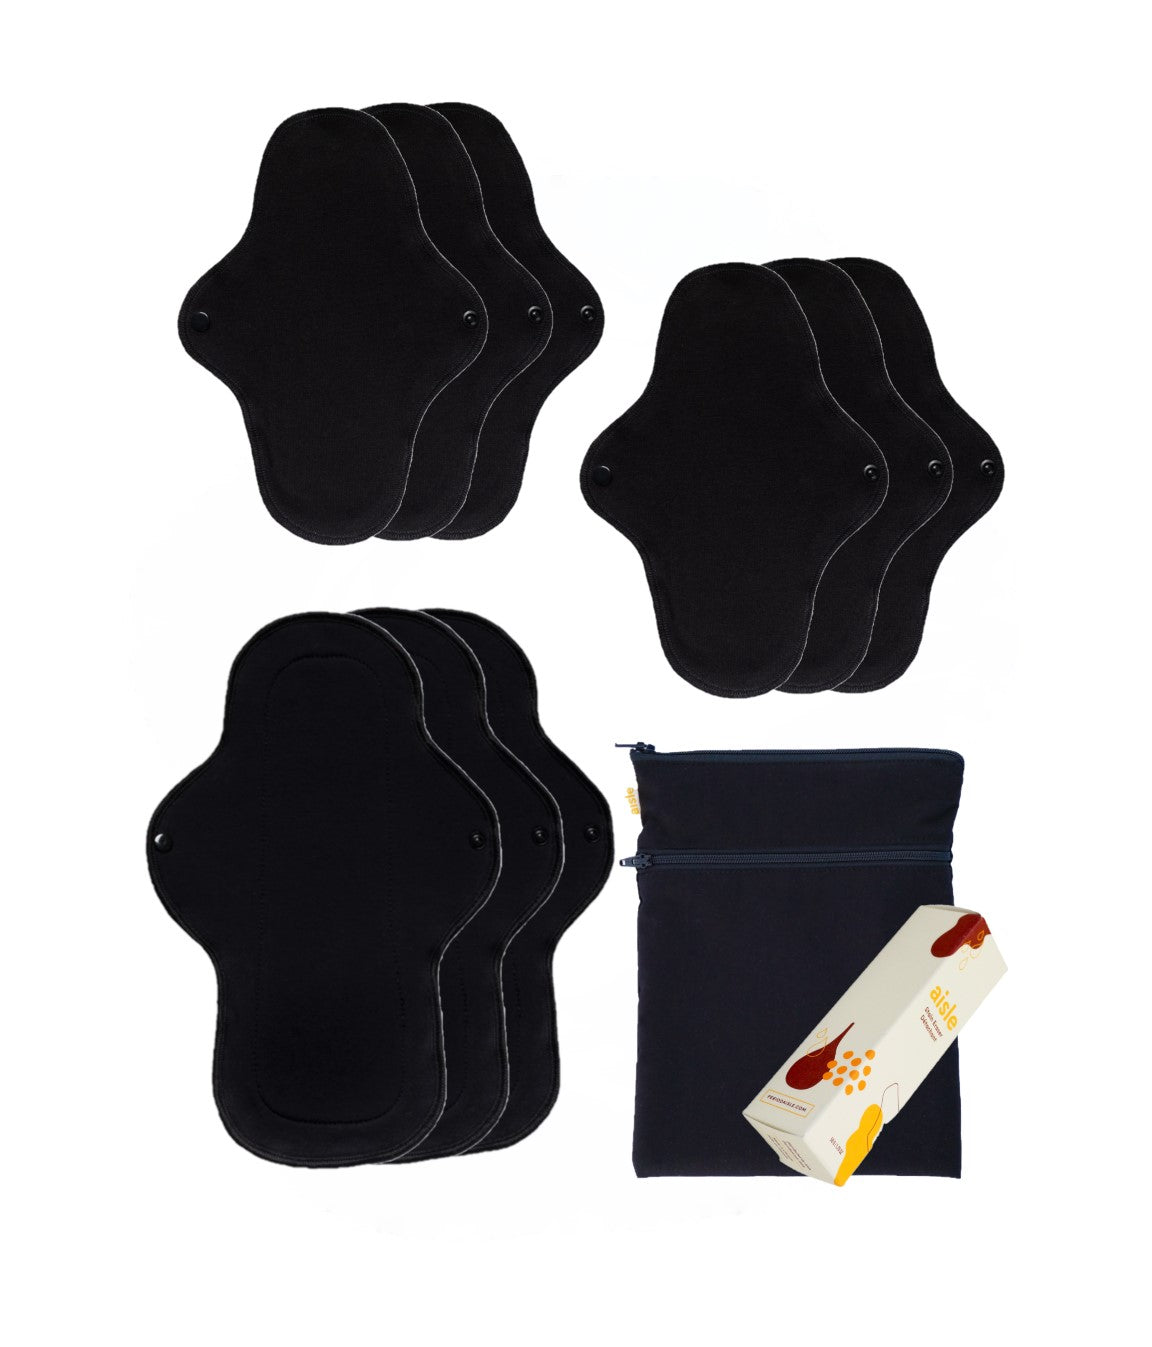 Cloth Pads Set/obv Cloth Pads/reusable Pads/menstrual Pads/ 